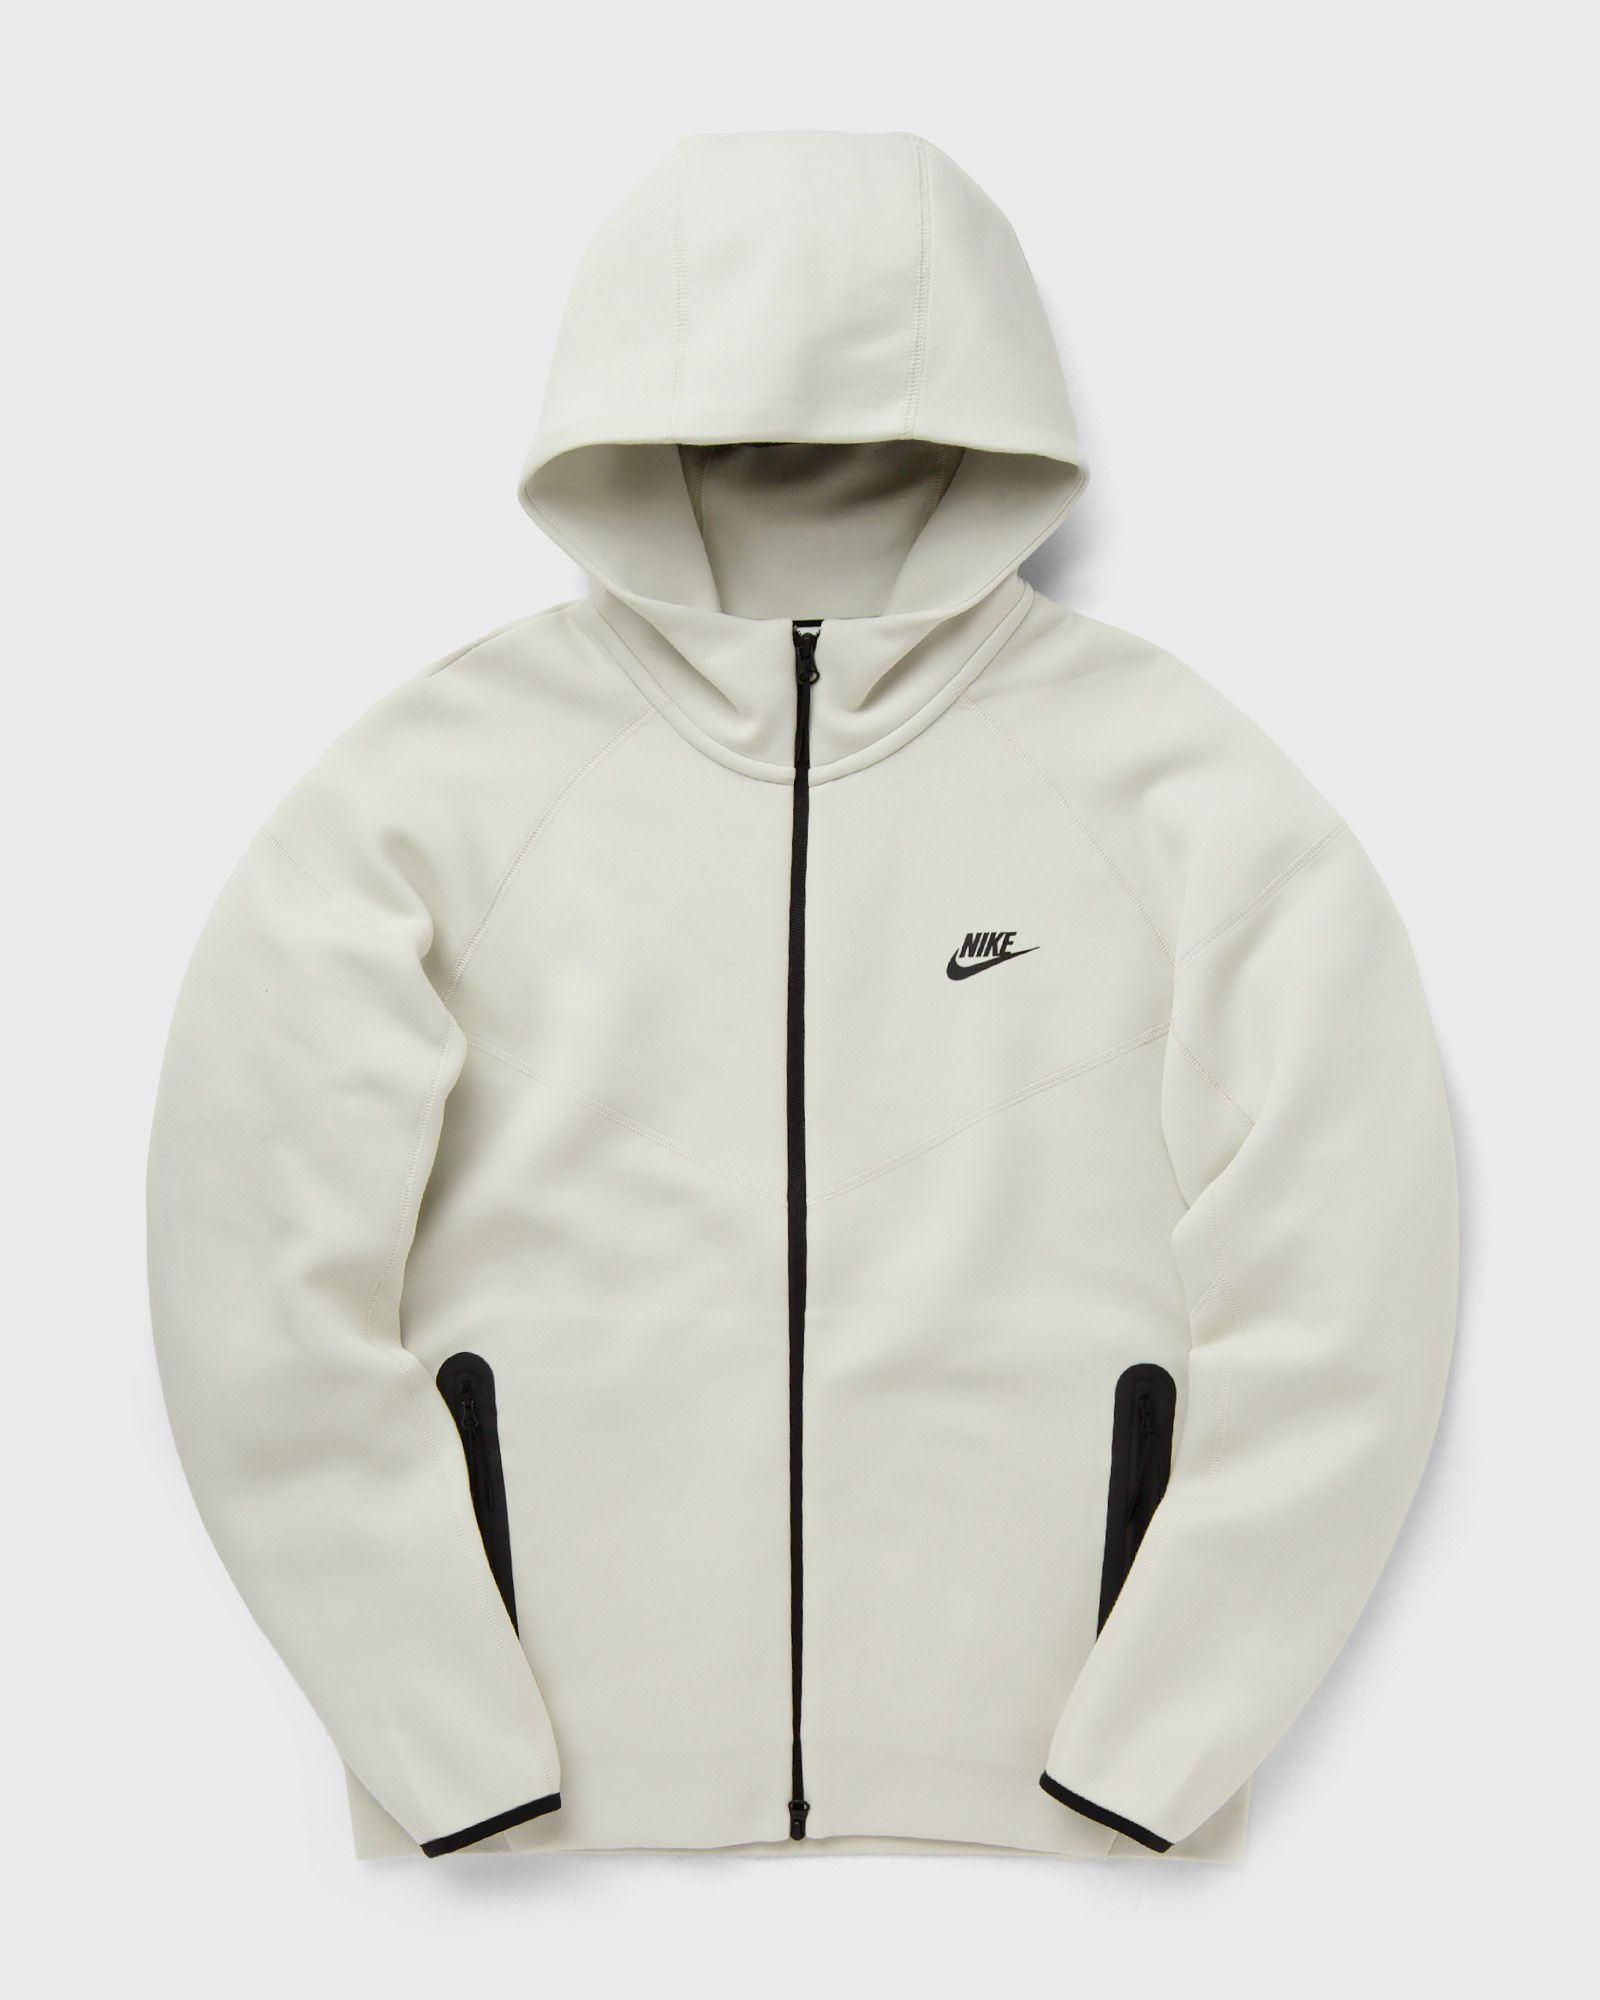 Nike - tech fleece windrunner full-zip hoodie men hoodies|zippers white in größe:xxl